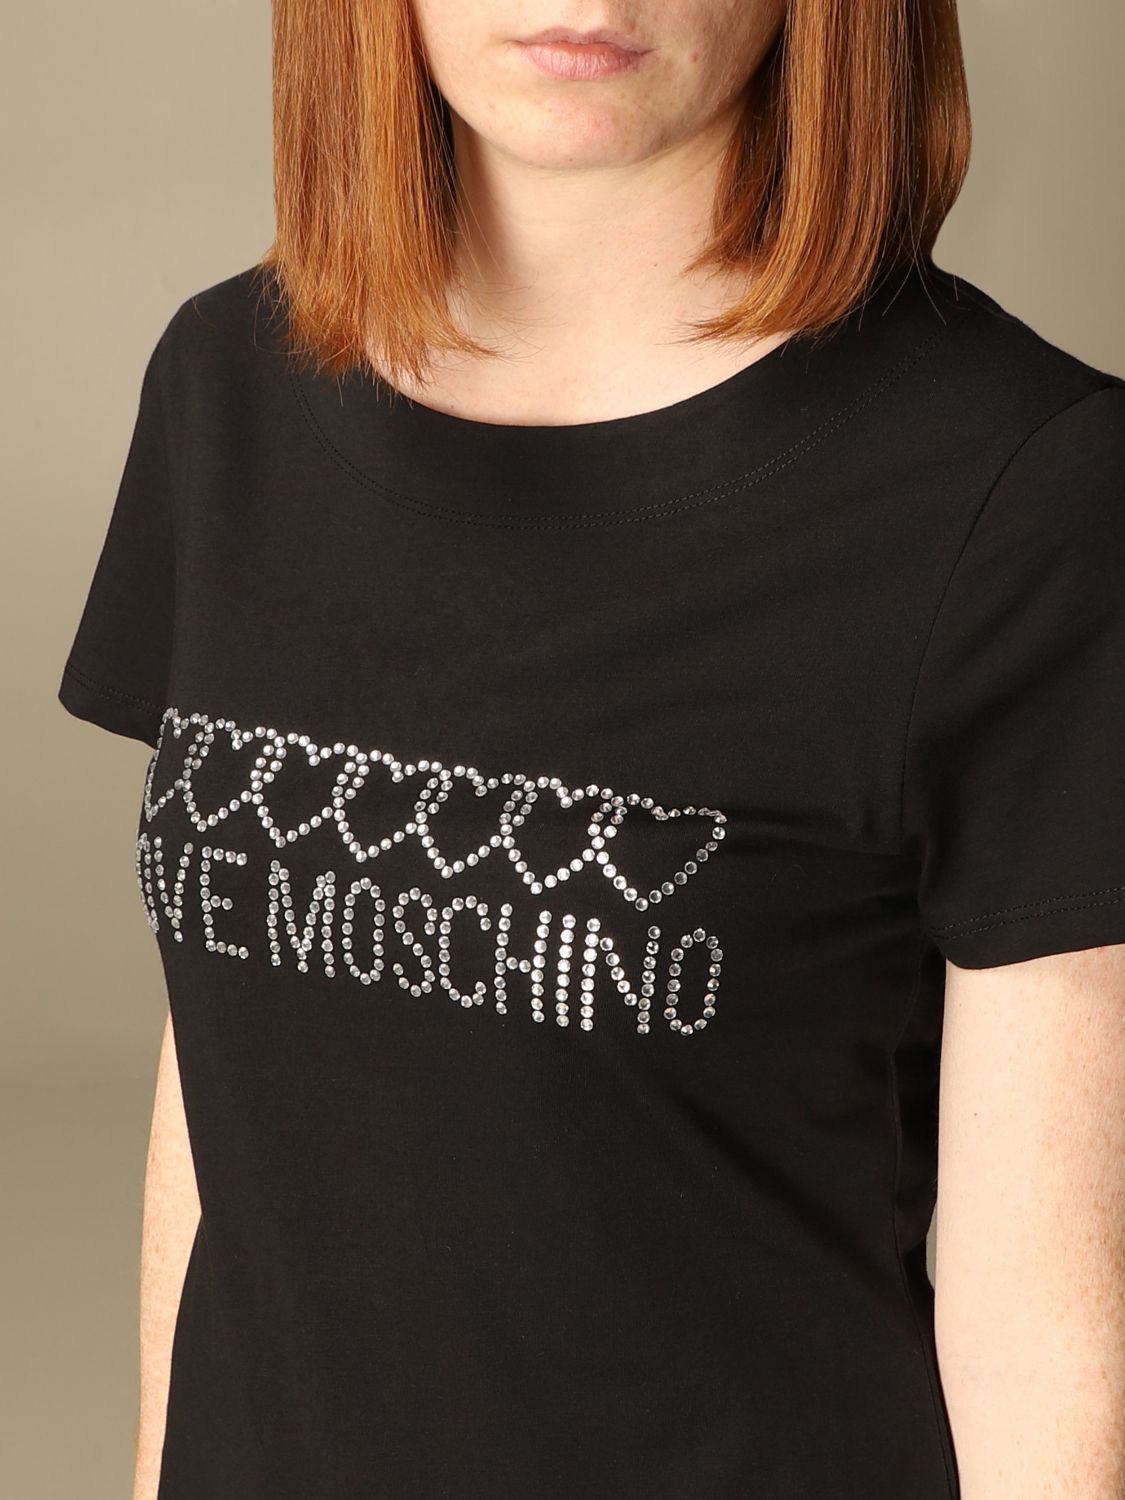 moschino women's t shirt dress